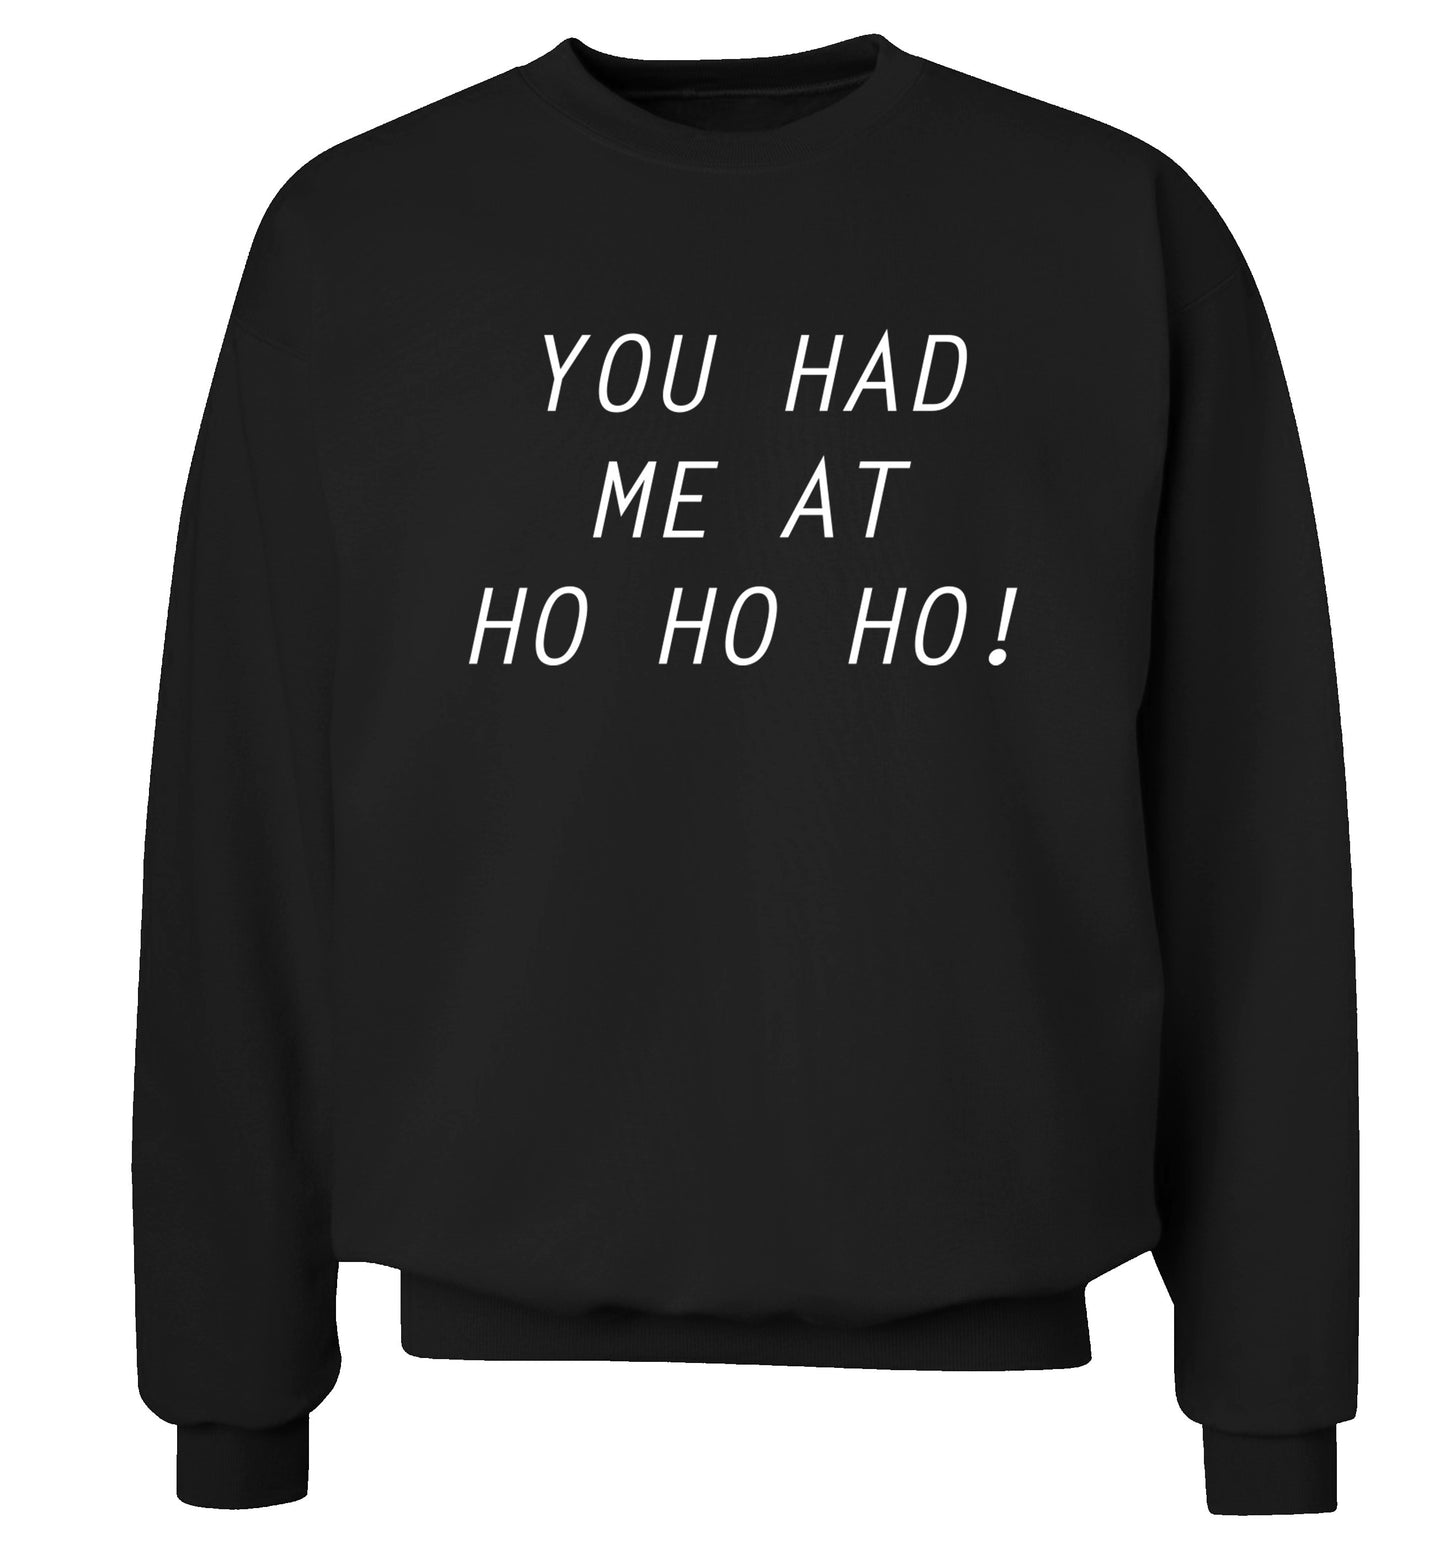 You had me at ho ho ho Adult's unisex black Sweater 2XL